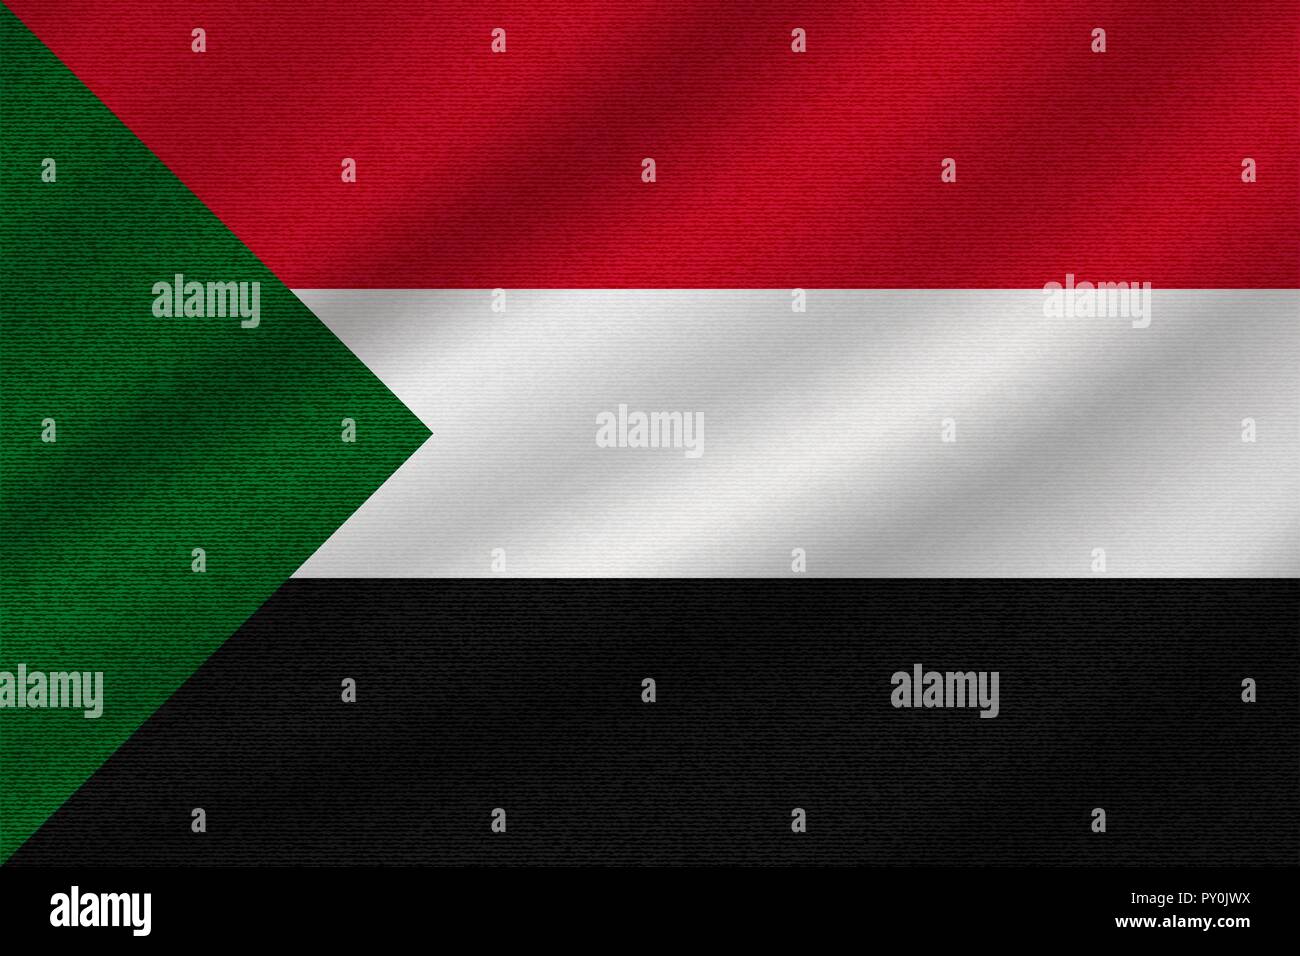 national flag of Sudan on wavy cotton fabric. Realistic vector illustration. Stock Vector